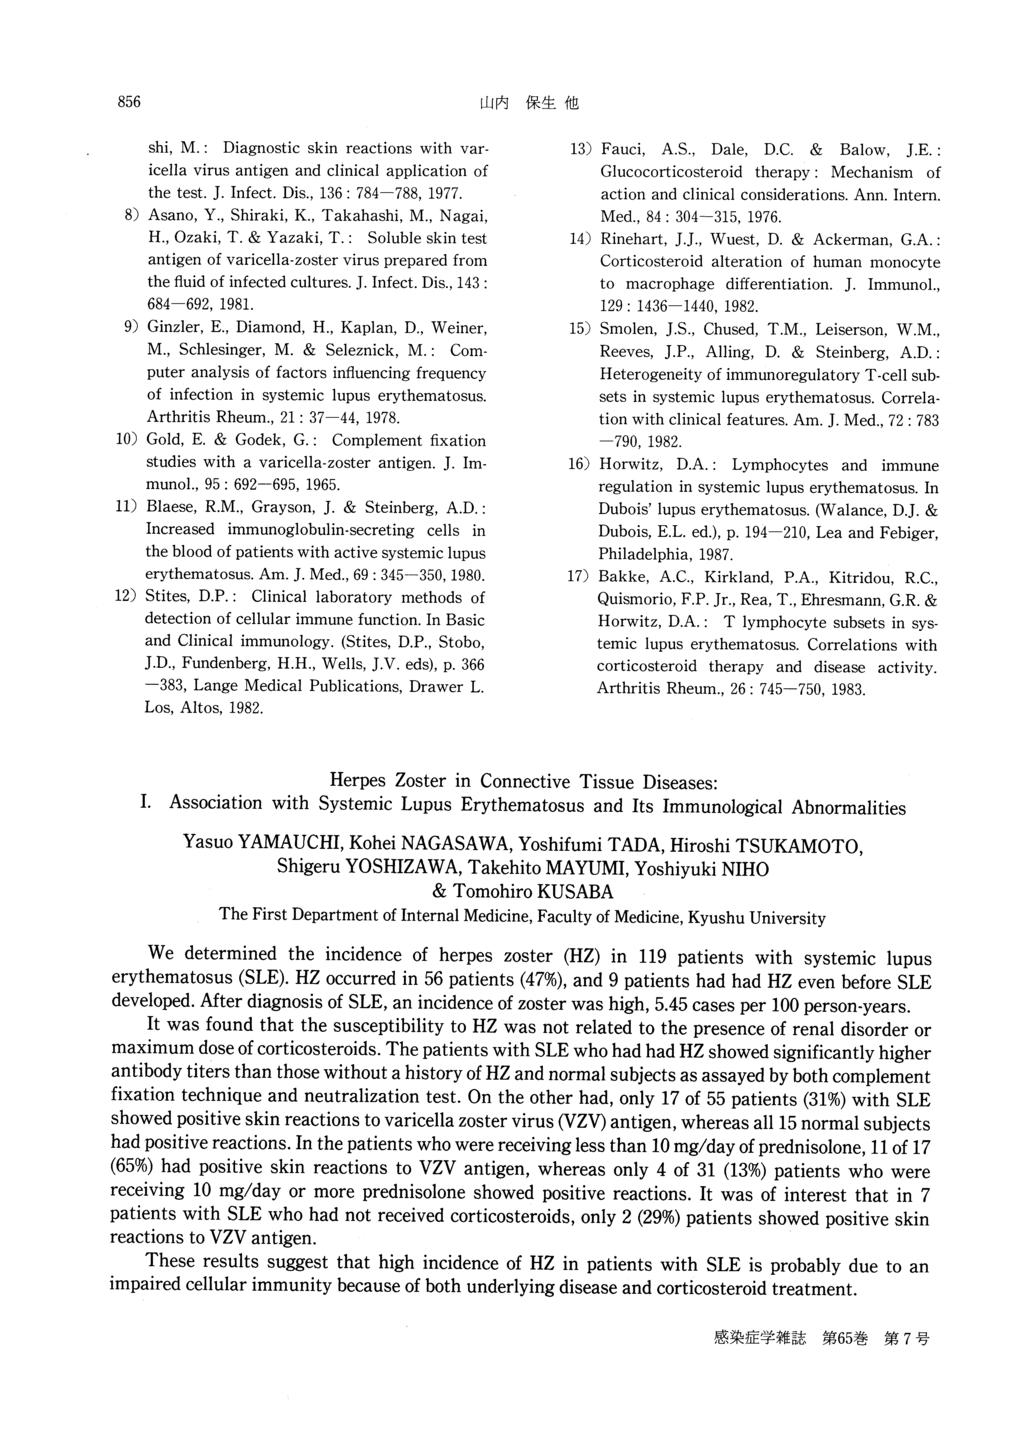 shi, M.: Diagnostic skin reactions with varicella virus antigen and clinical application of the test. J. Infect. Dis., 136 : 784 \788, 1977. 8) Asano, Y., Shiraki, K., Takahashi, M., Nagai, H.